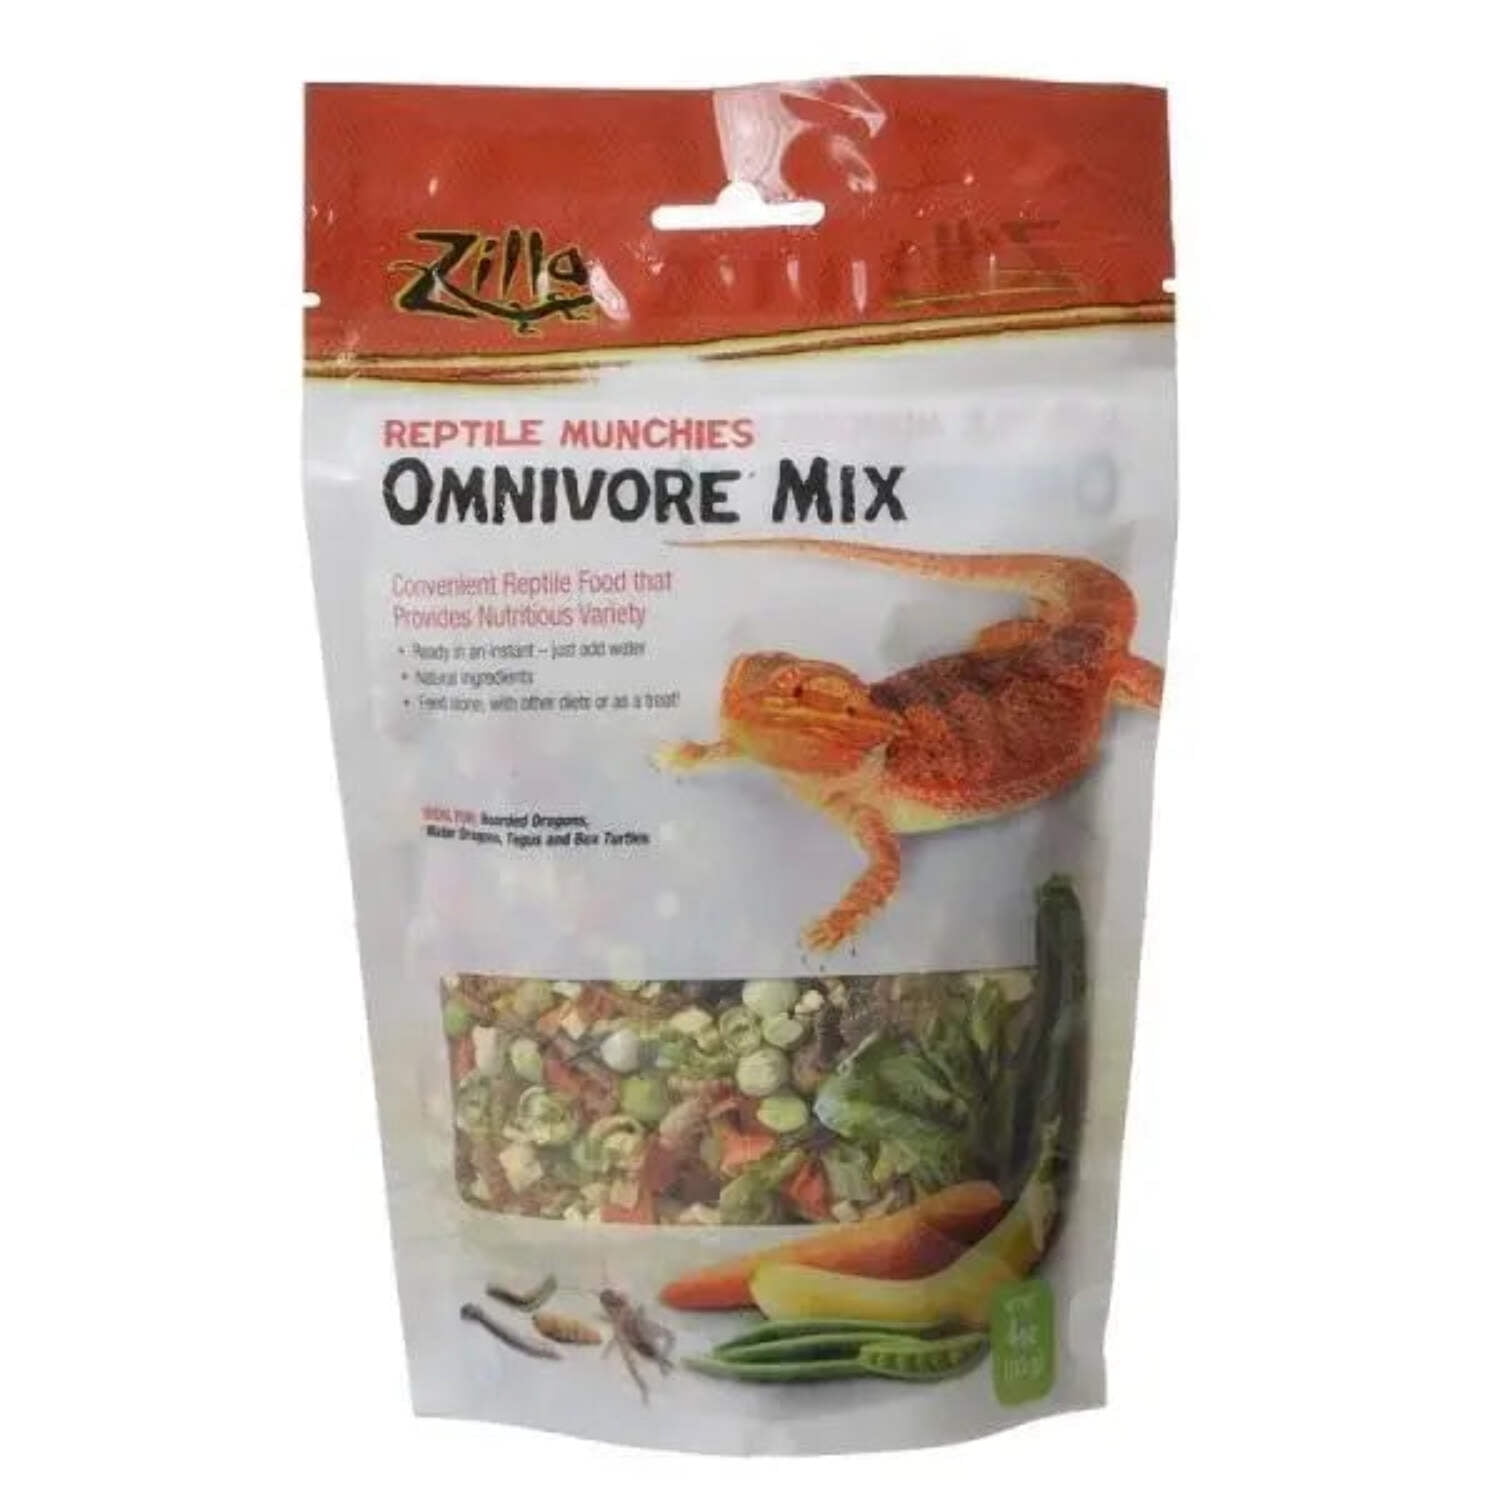 Zilla Reptile Munchies Omnivore Nutritional Mix Lizard Food 3-Pack